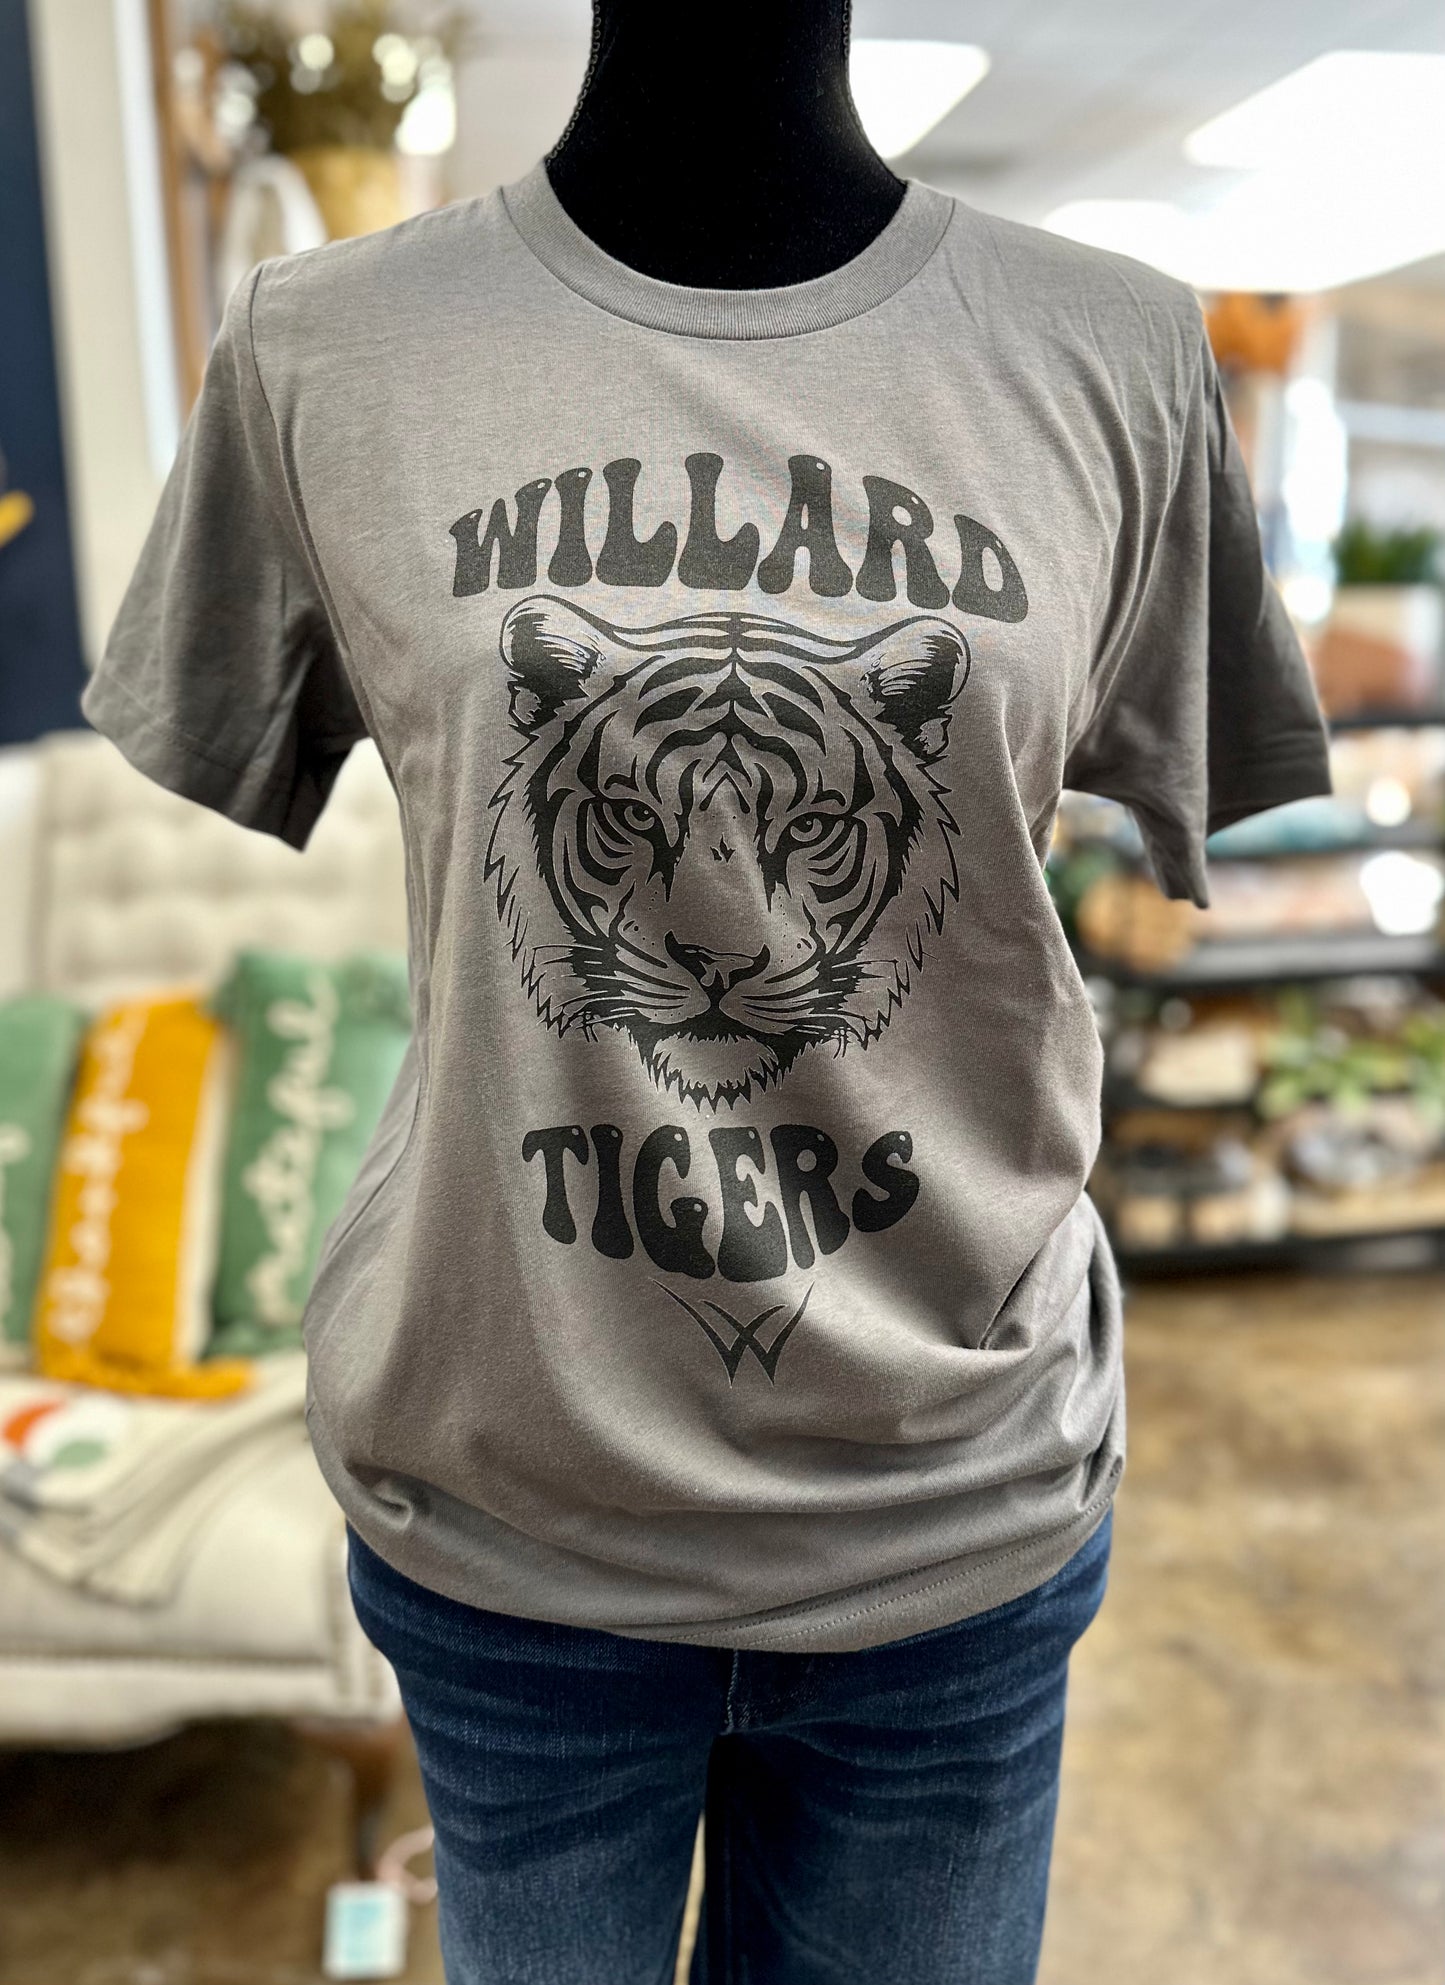 Willard Tigers Tee - Gray